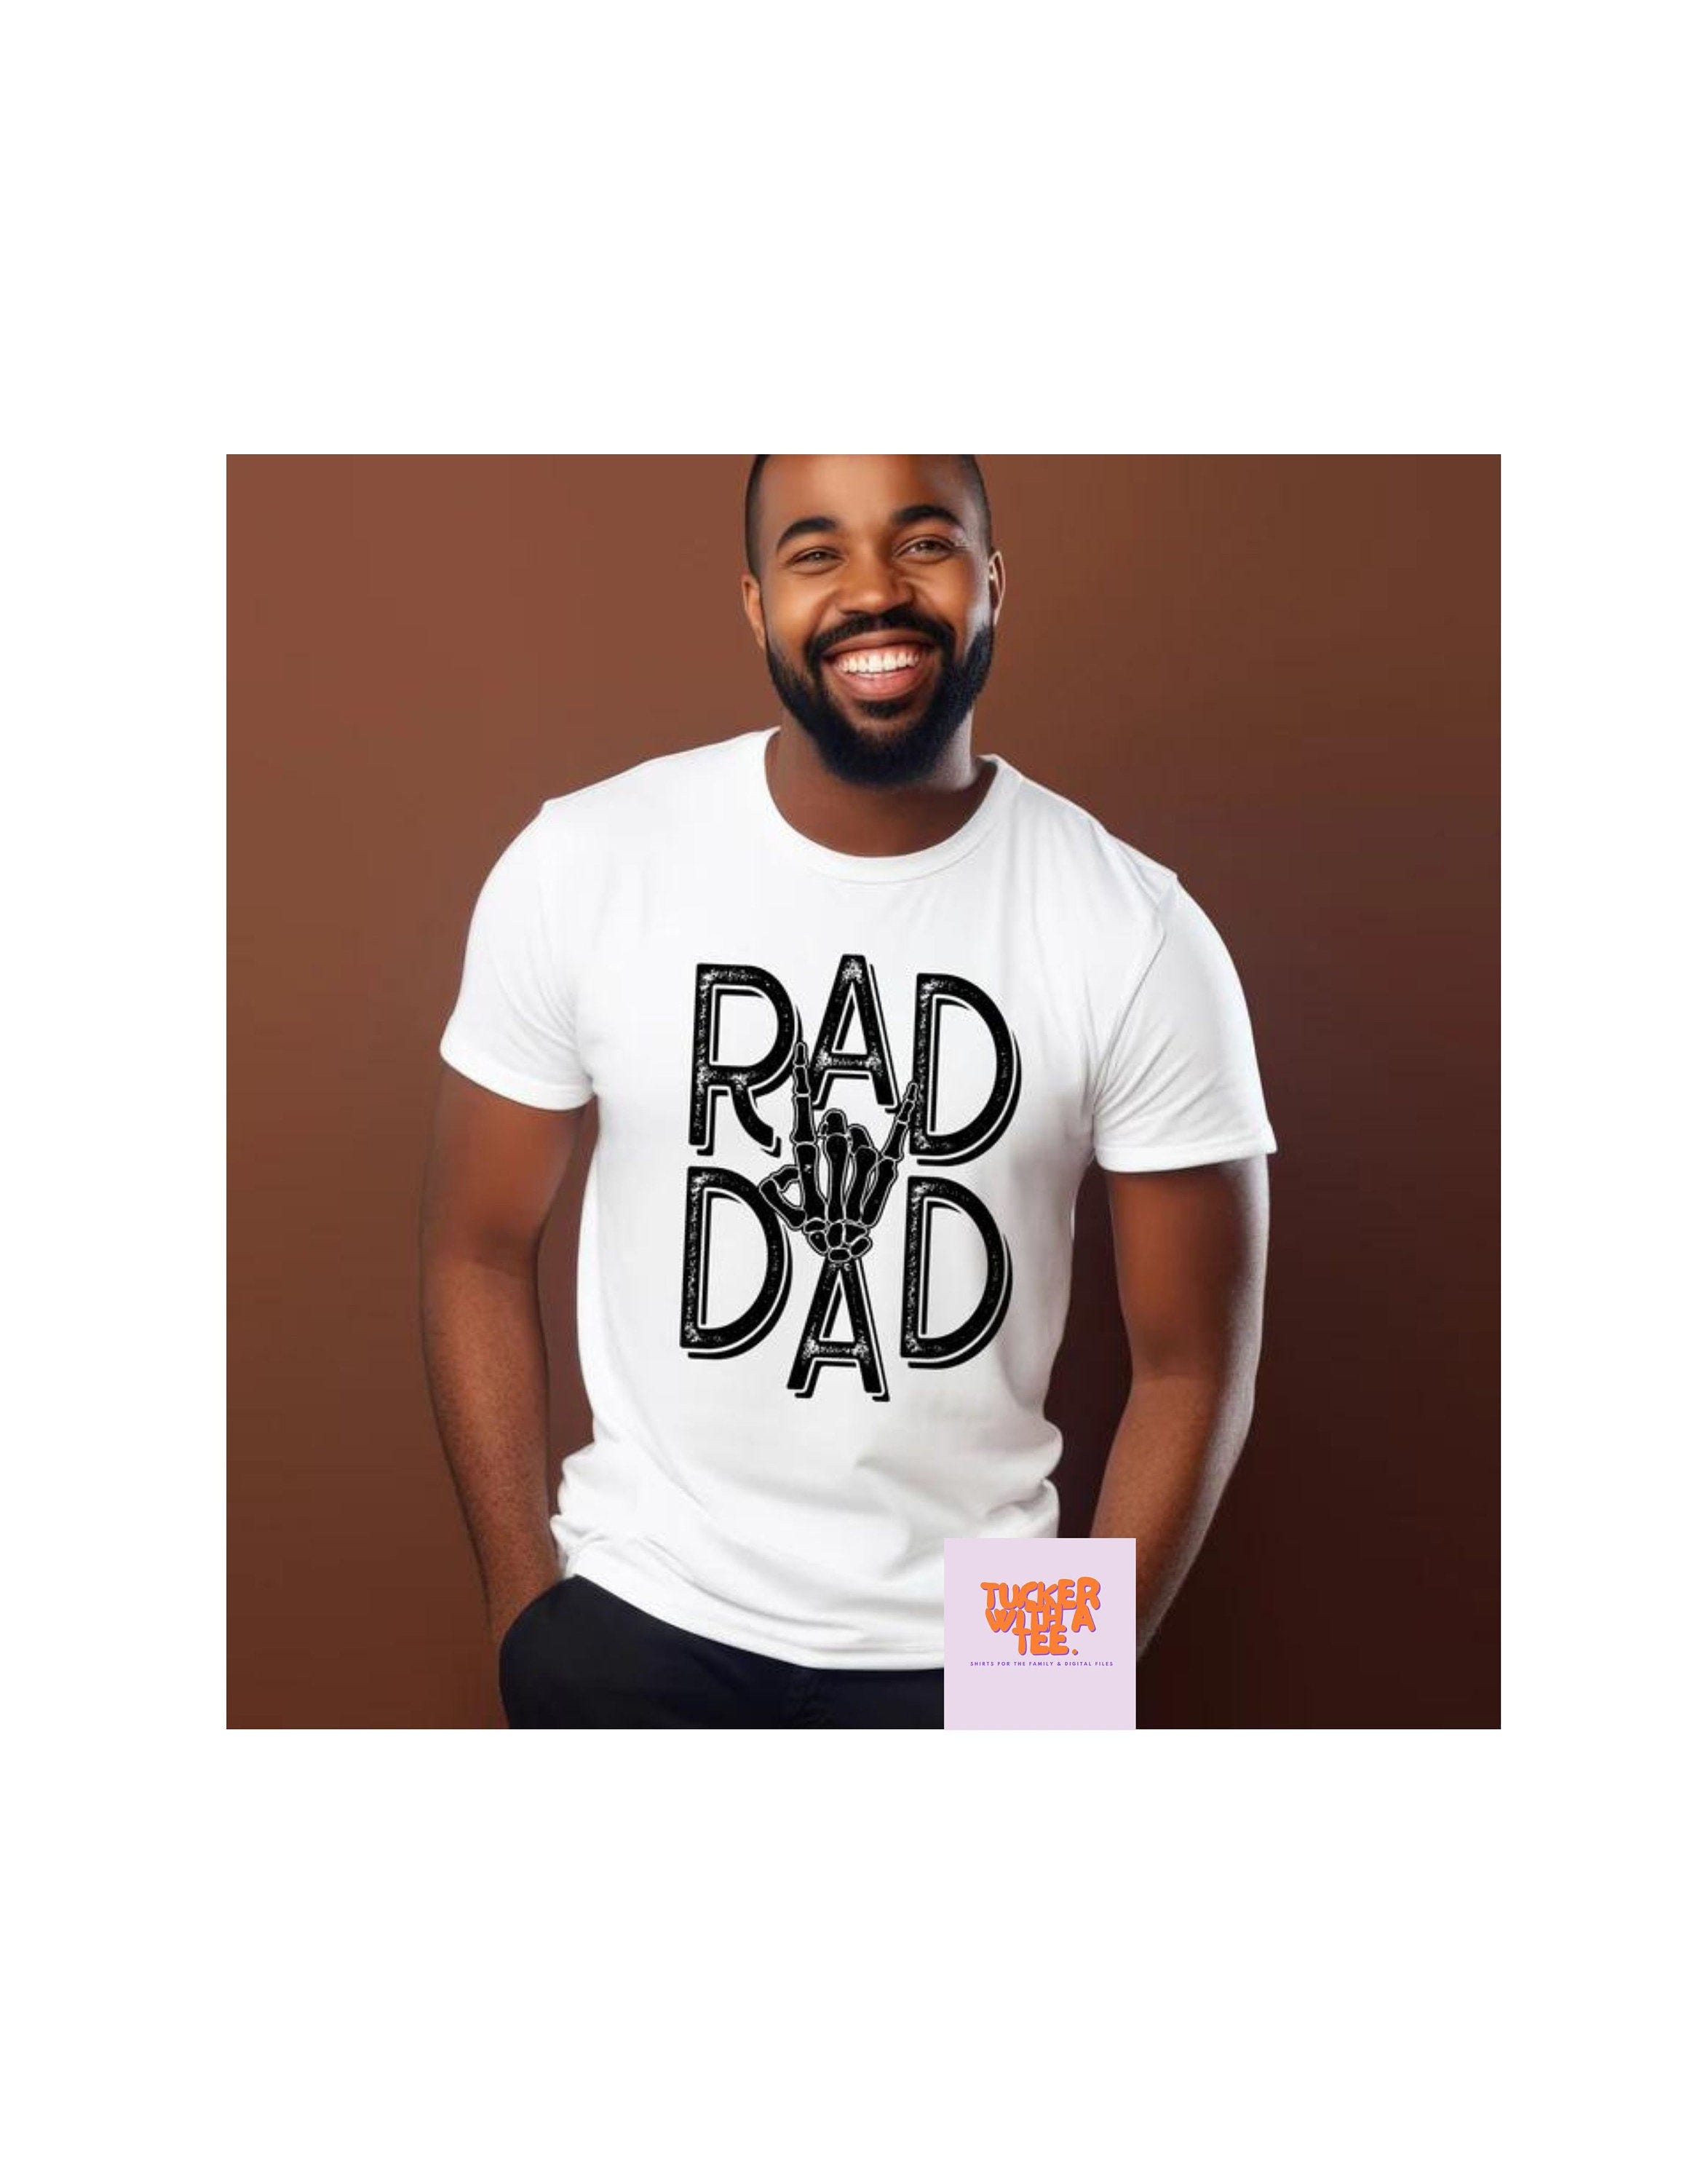 Rad Dad Shirt, Rad Dad Tee, Rad Dad Gift, Father